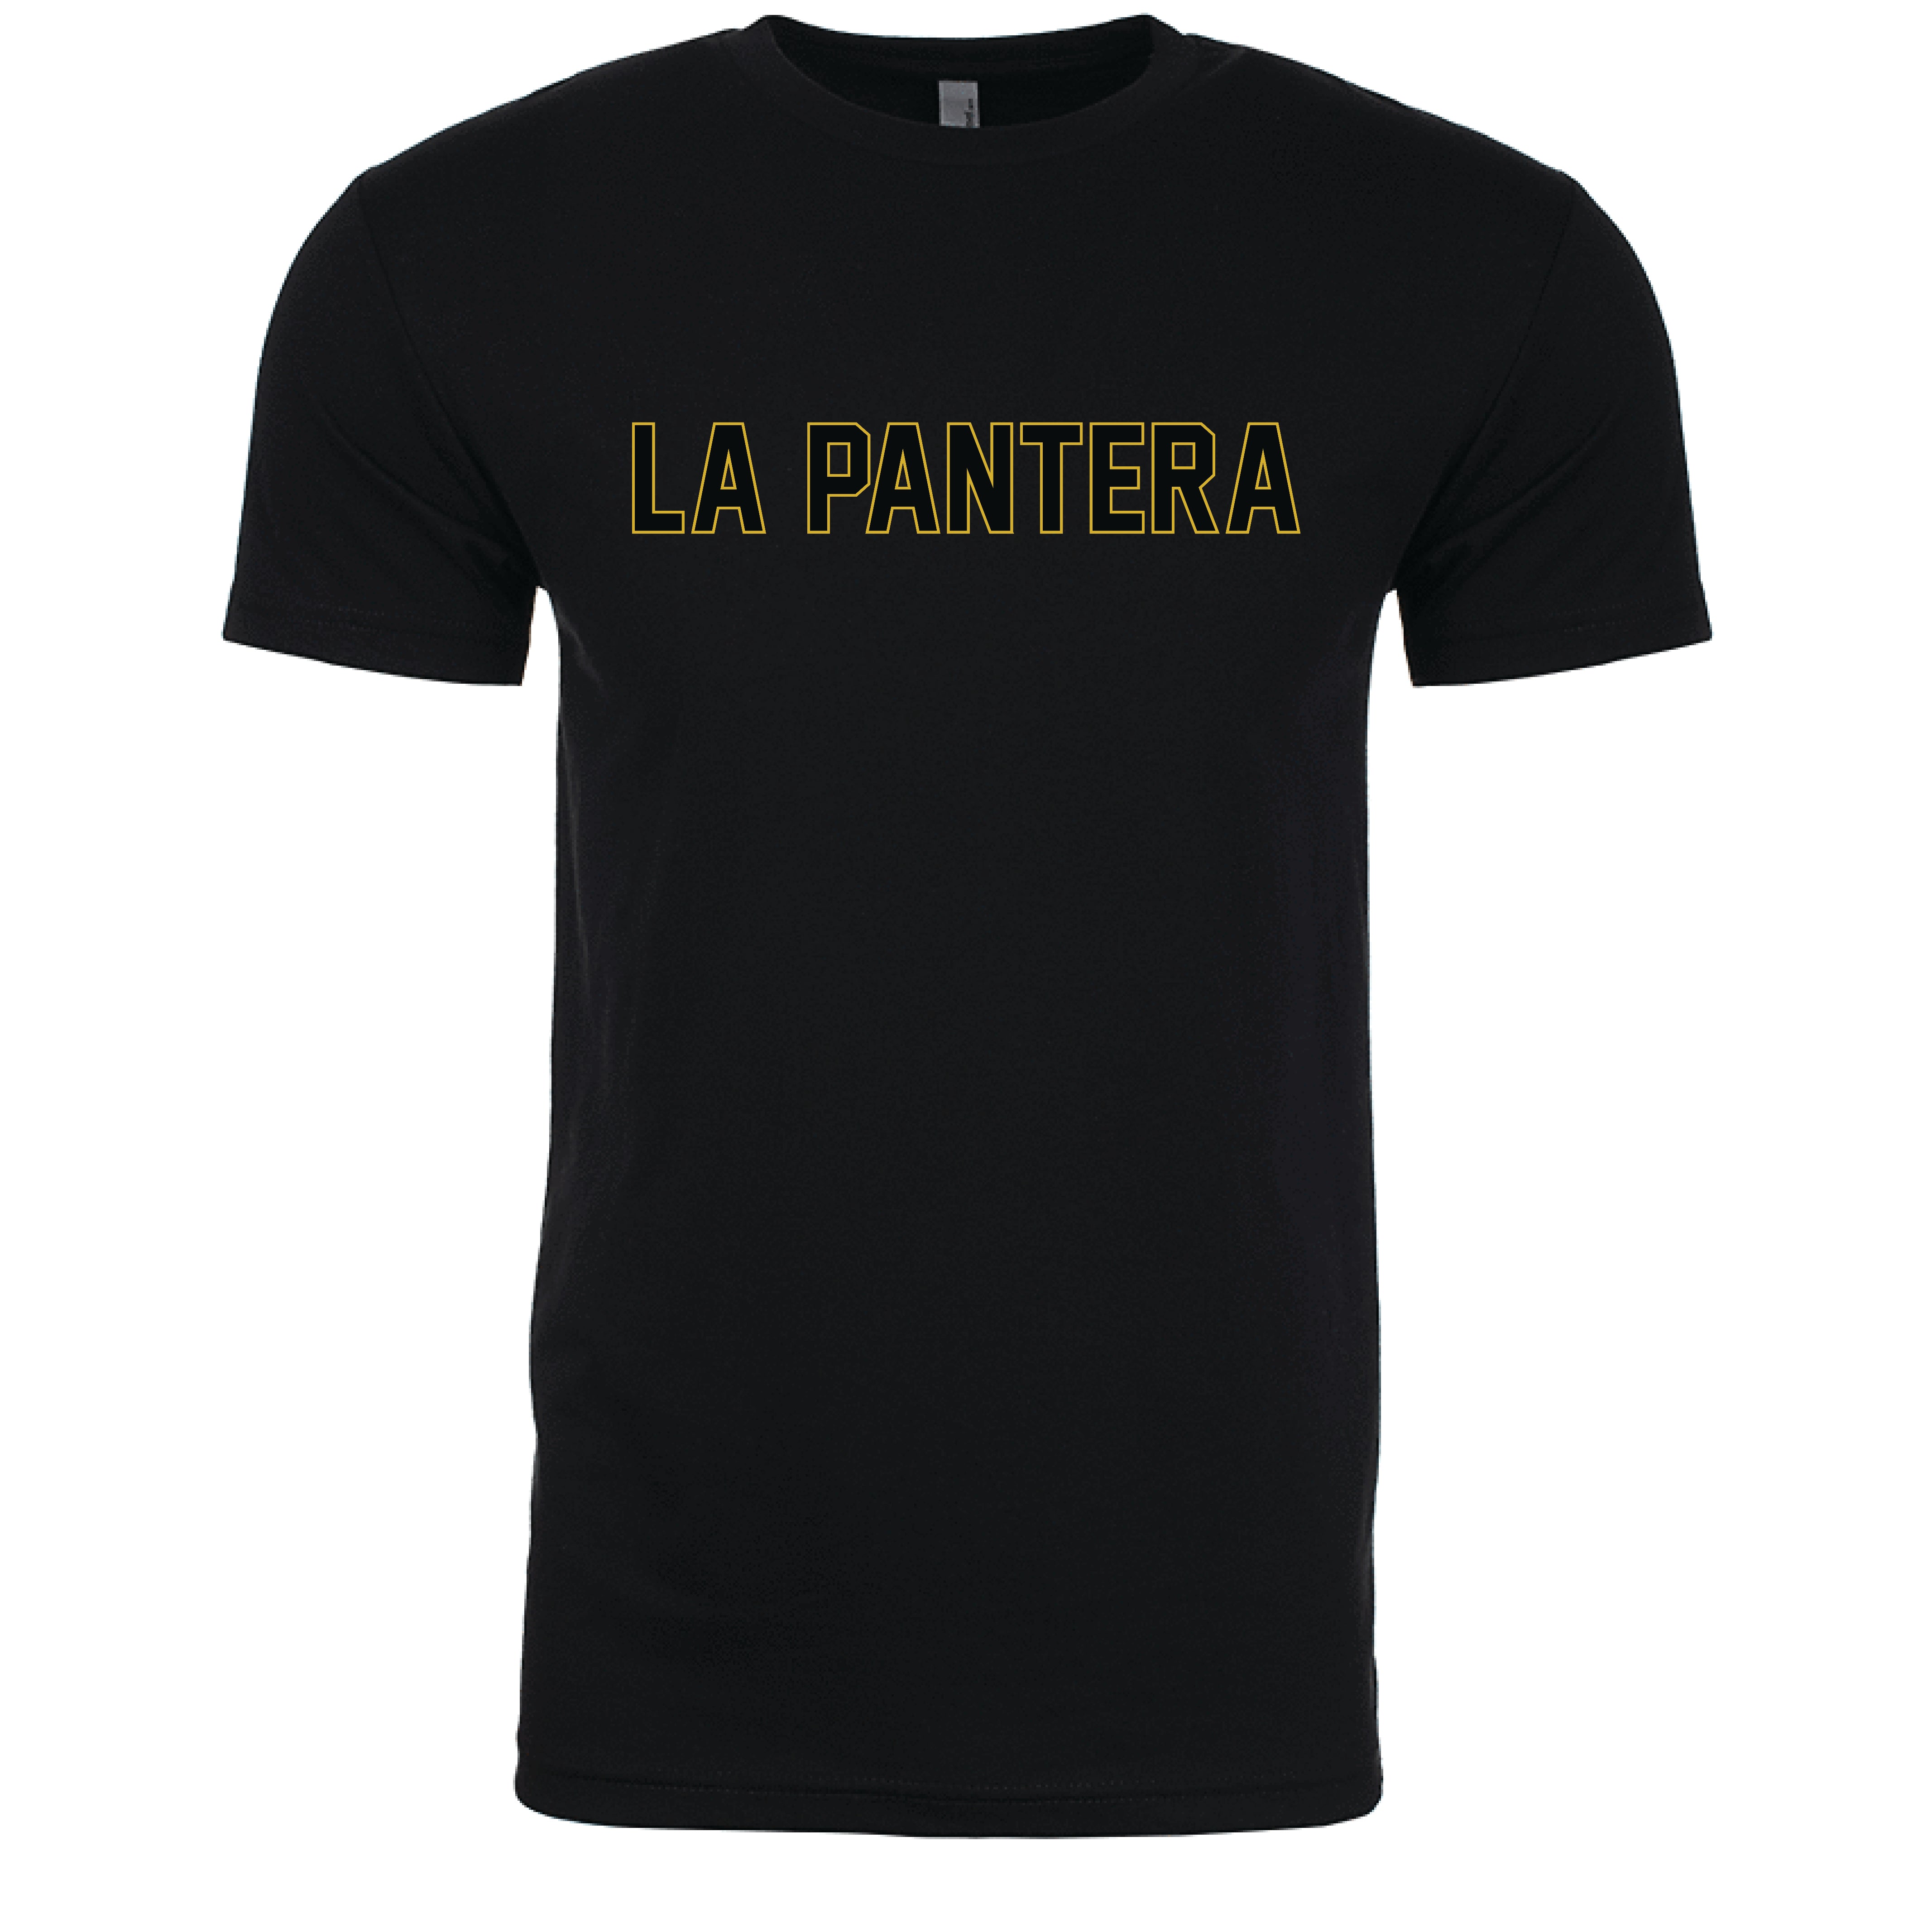 Black Short-Sleeve Tee with LA PANTERA nickname printed midchest